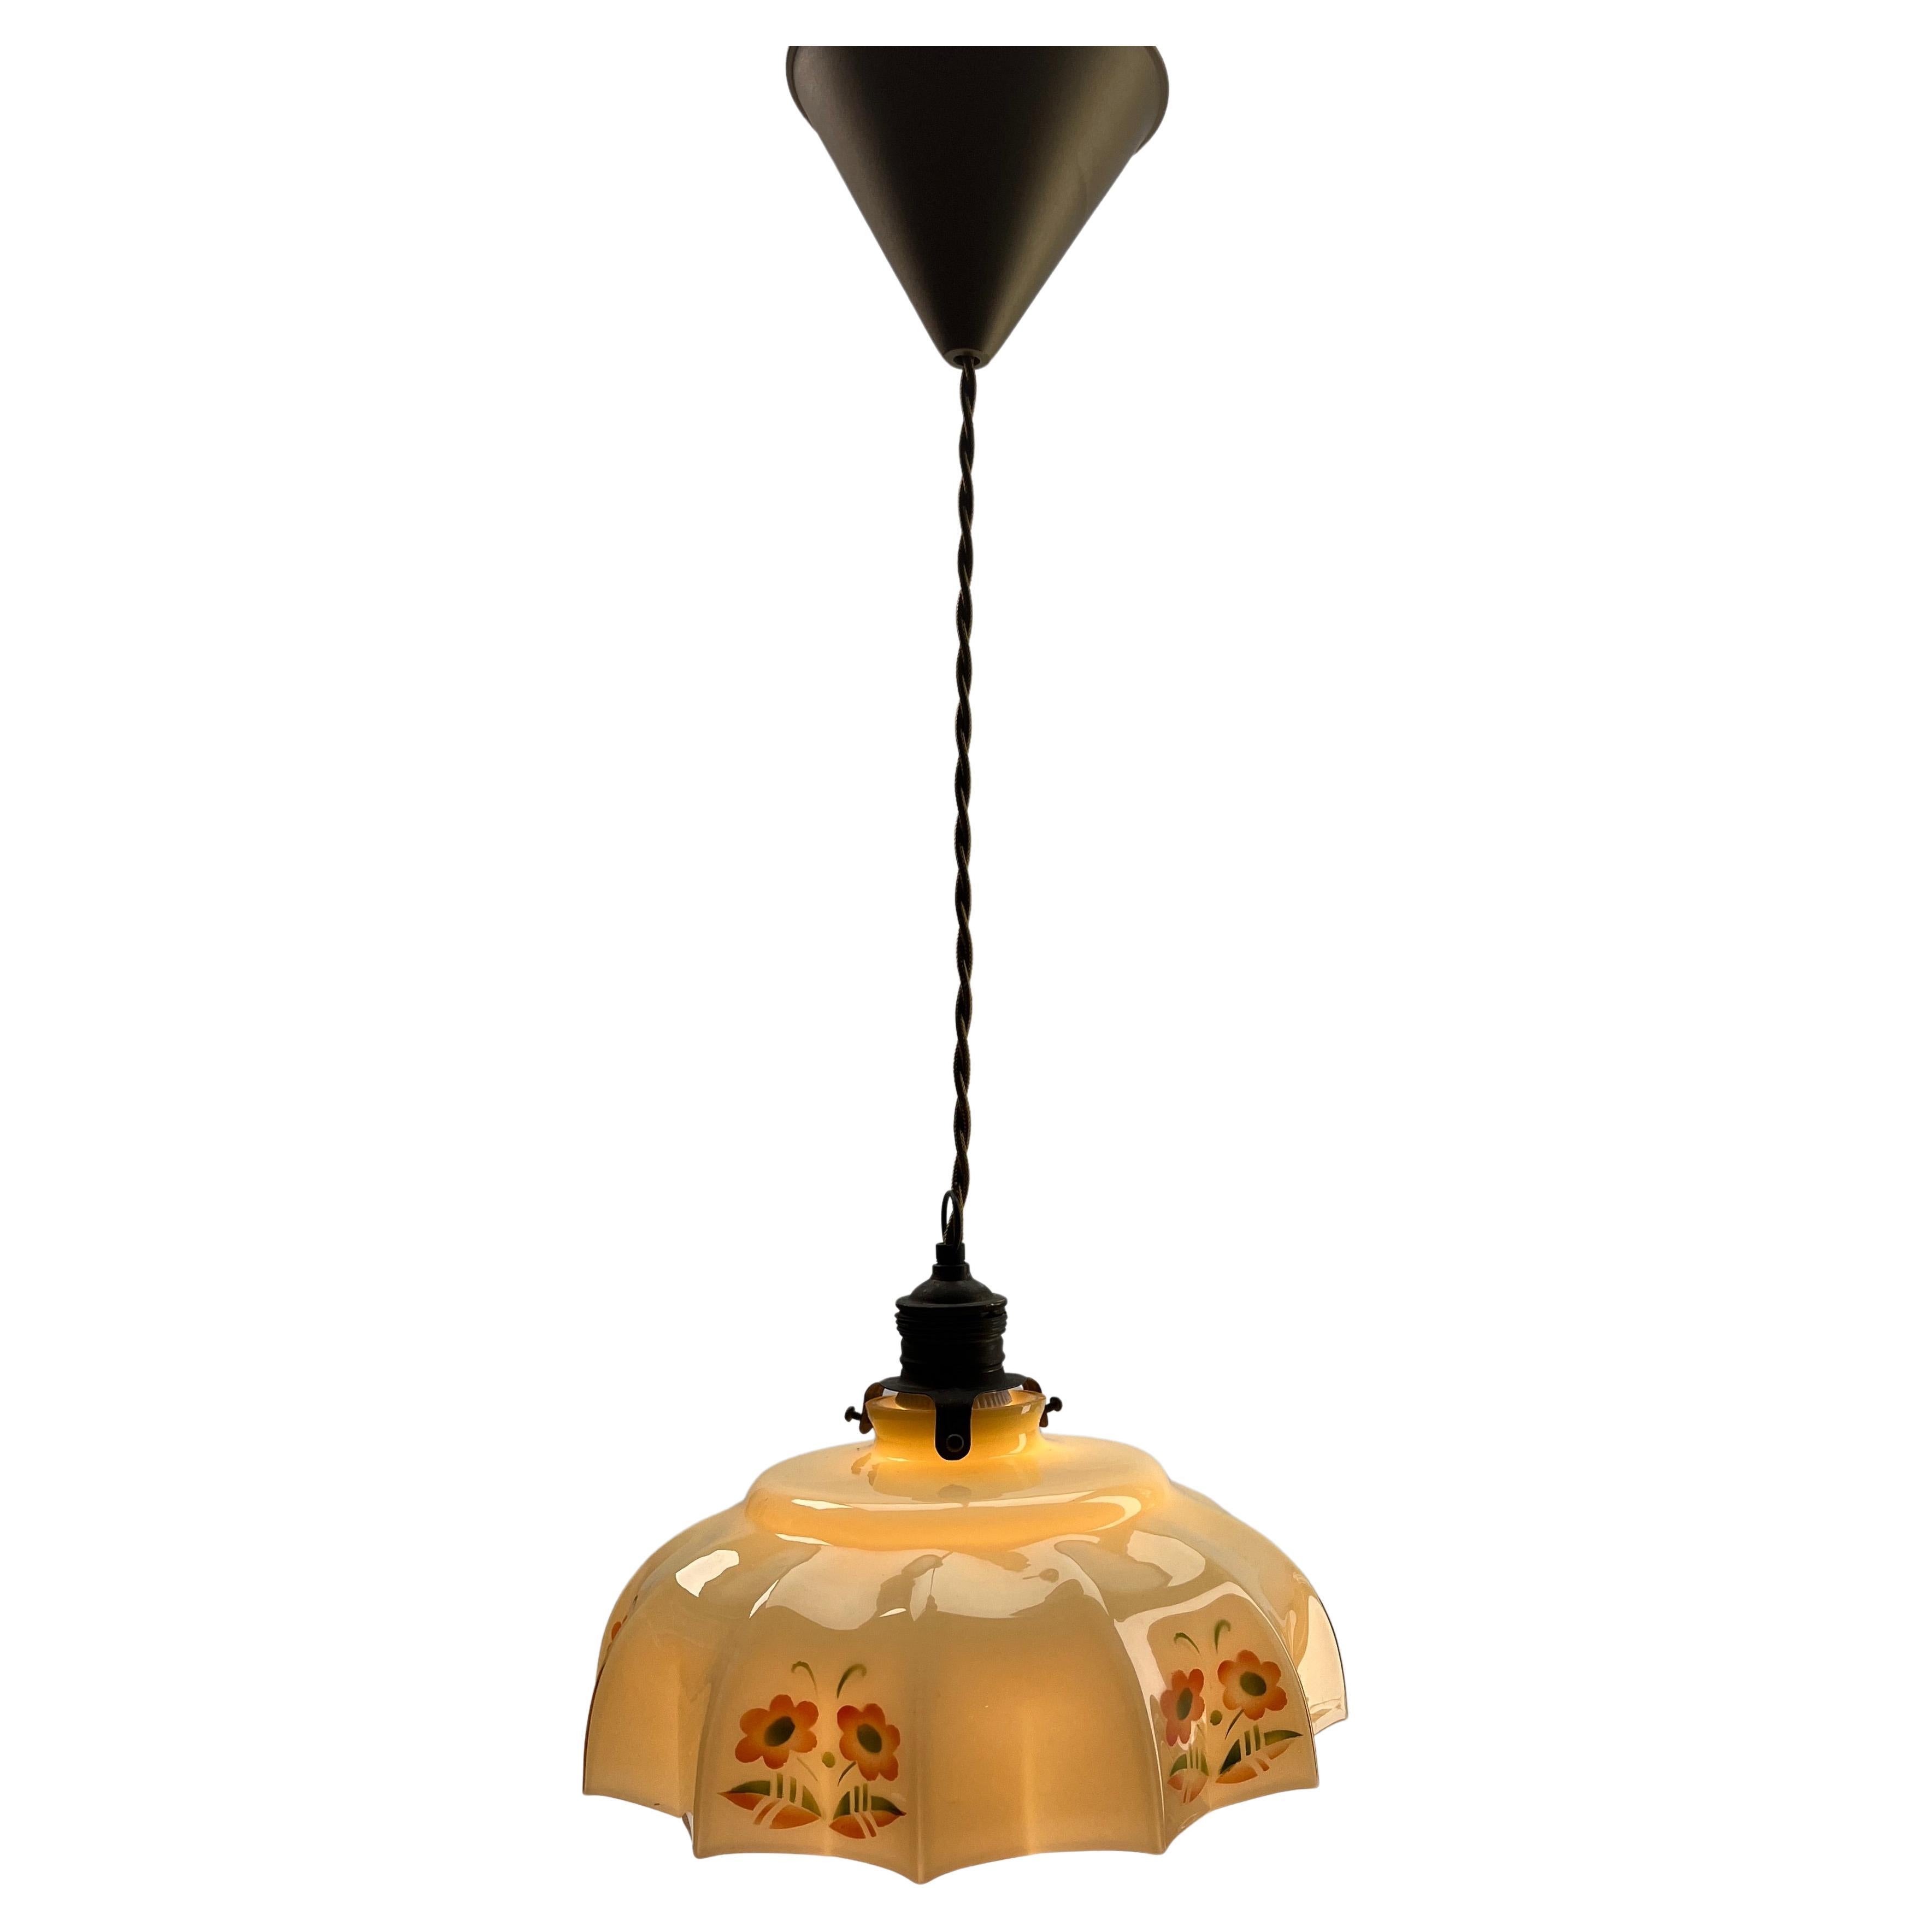 Mid-20th Century Art Nouveau Opaline Ceiling Lamp, Scailmont Belgium Glass Shade, 1930s For Sale